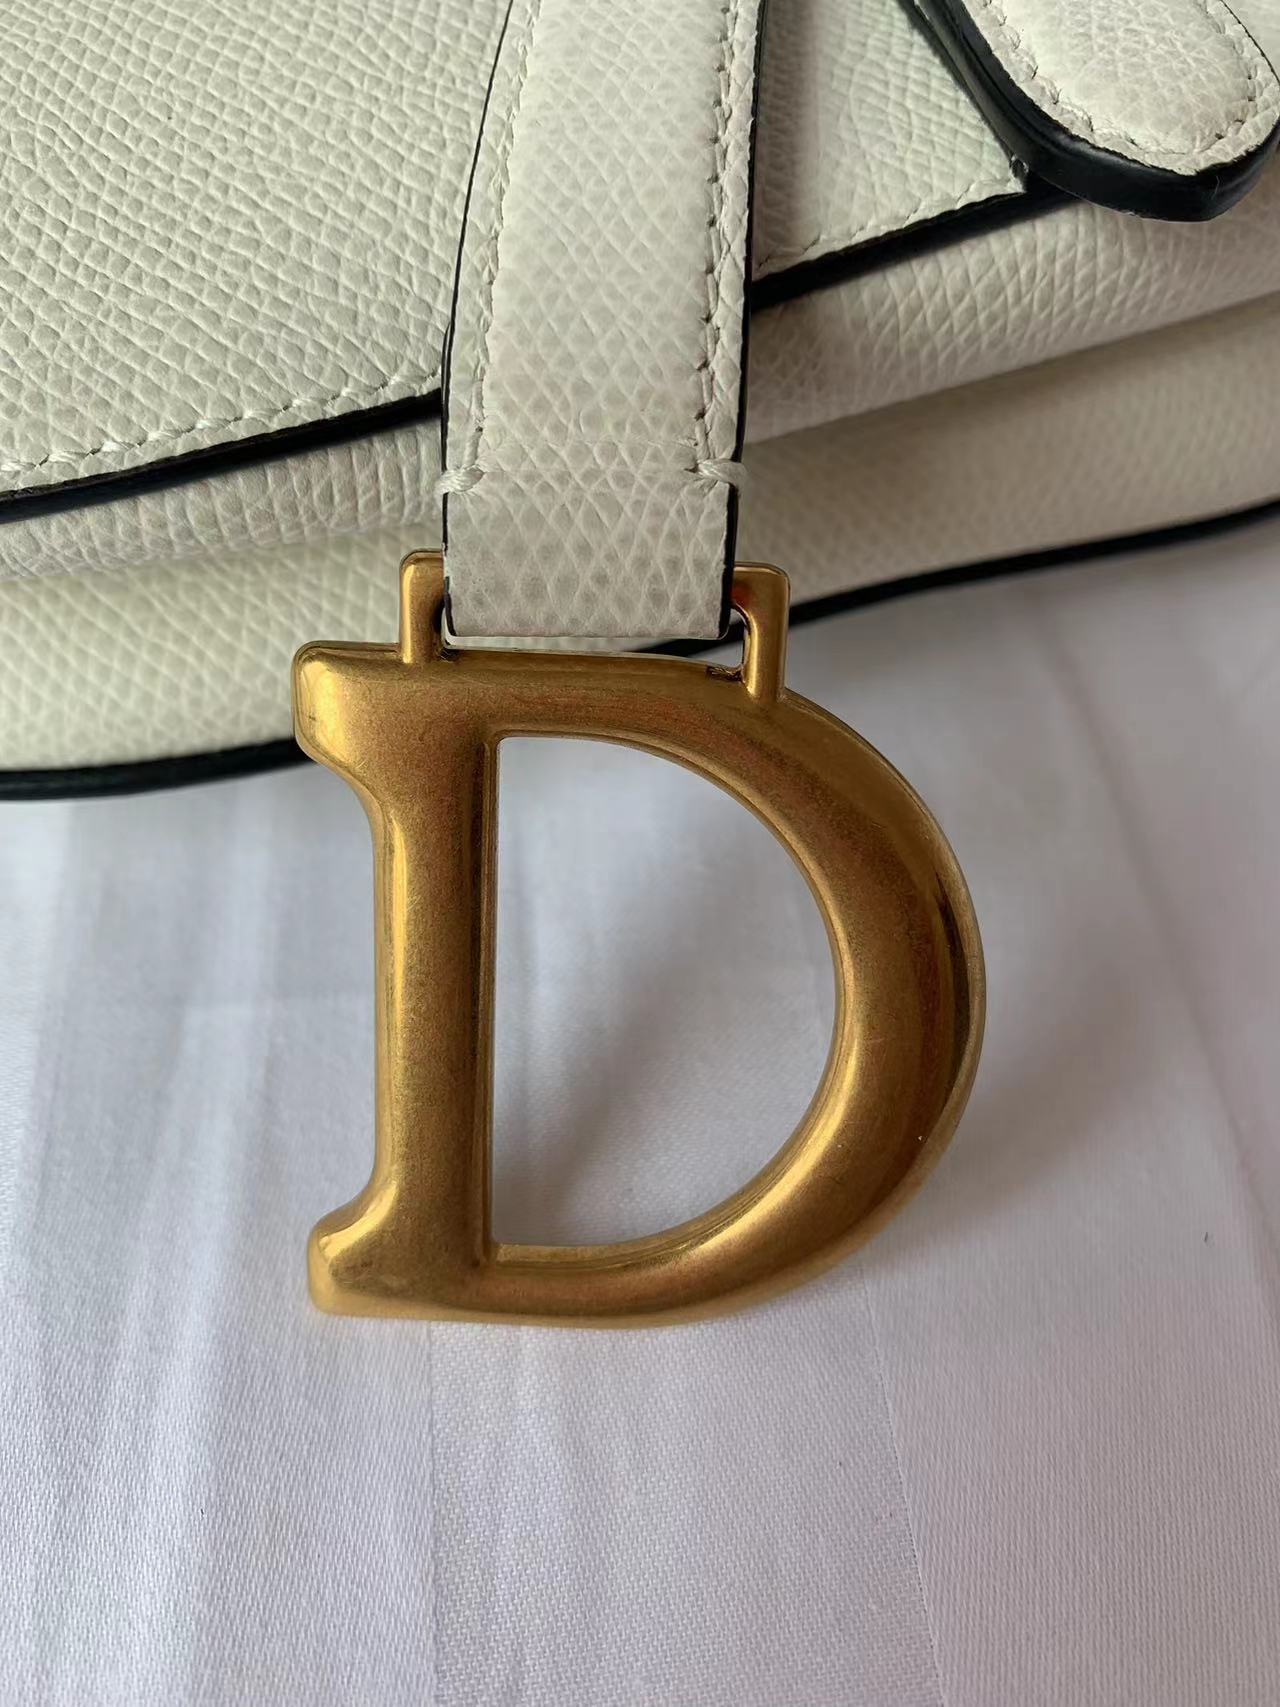 Dior Saddle bag white grain leather mini antiqued hardware